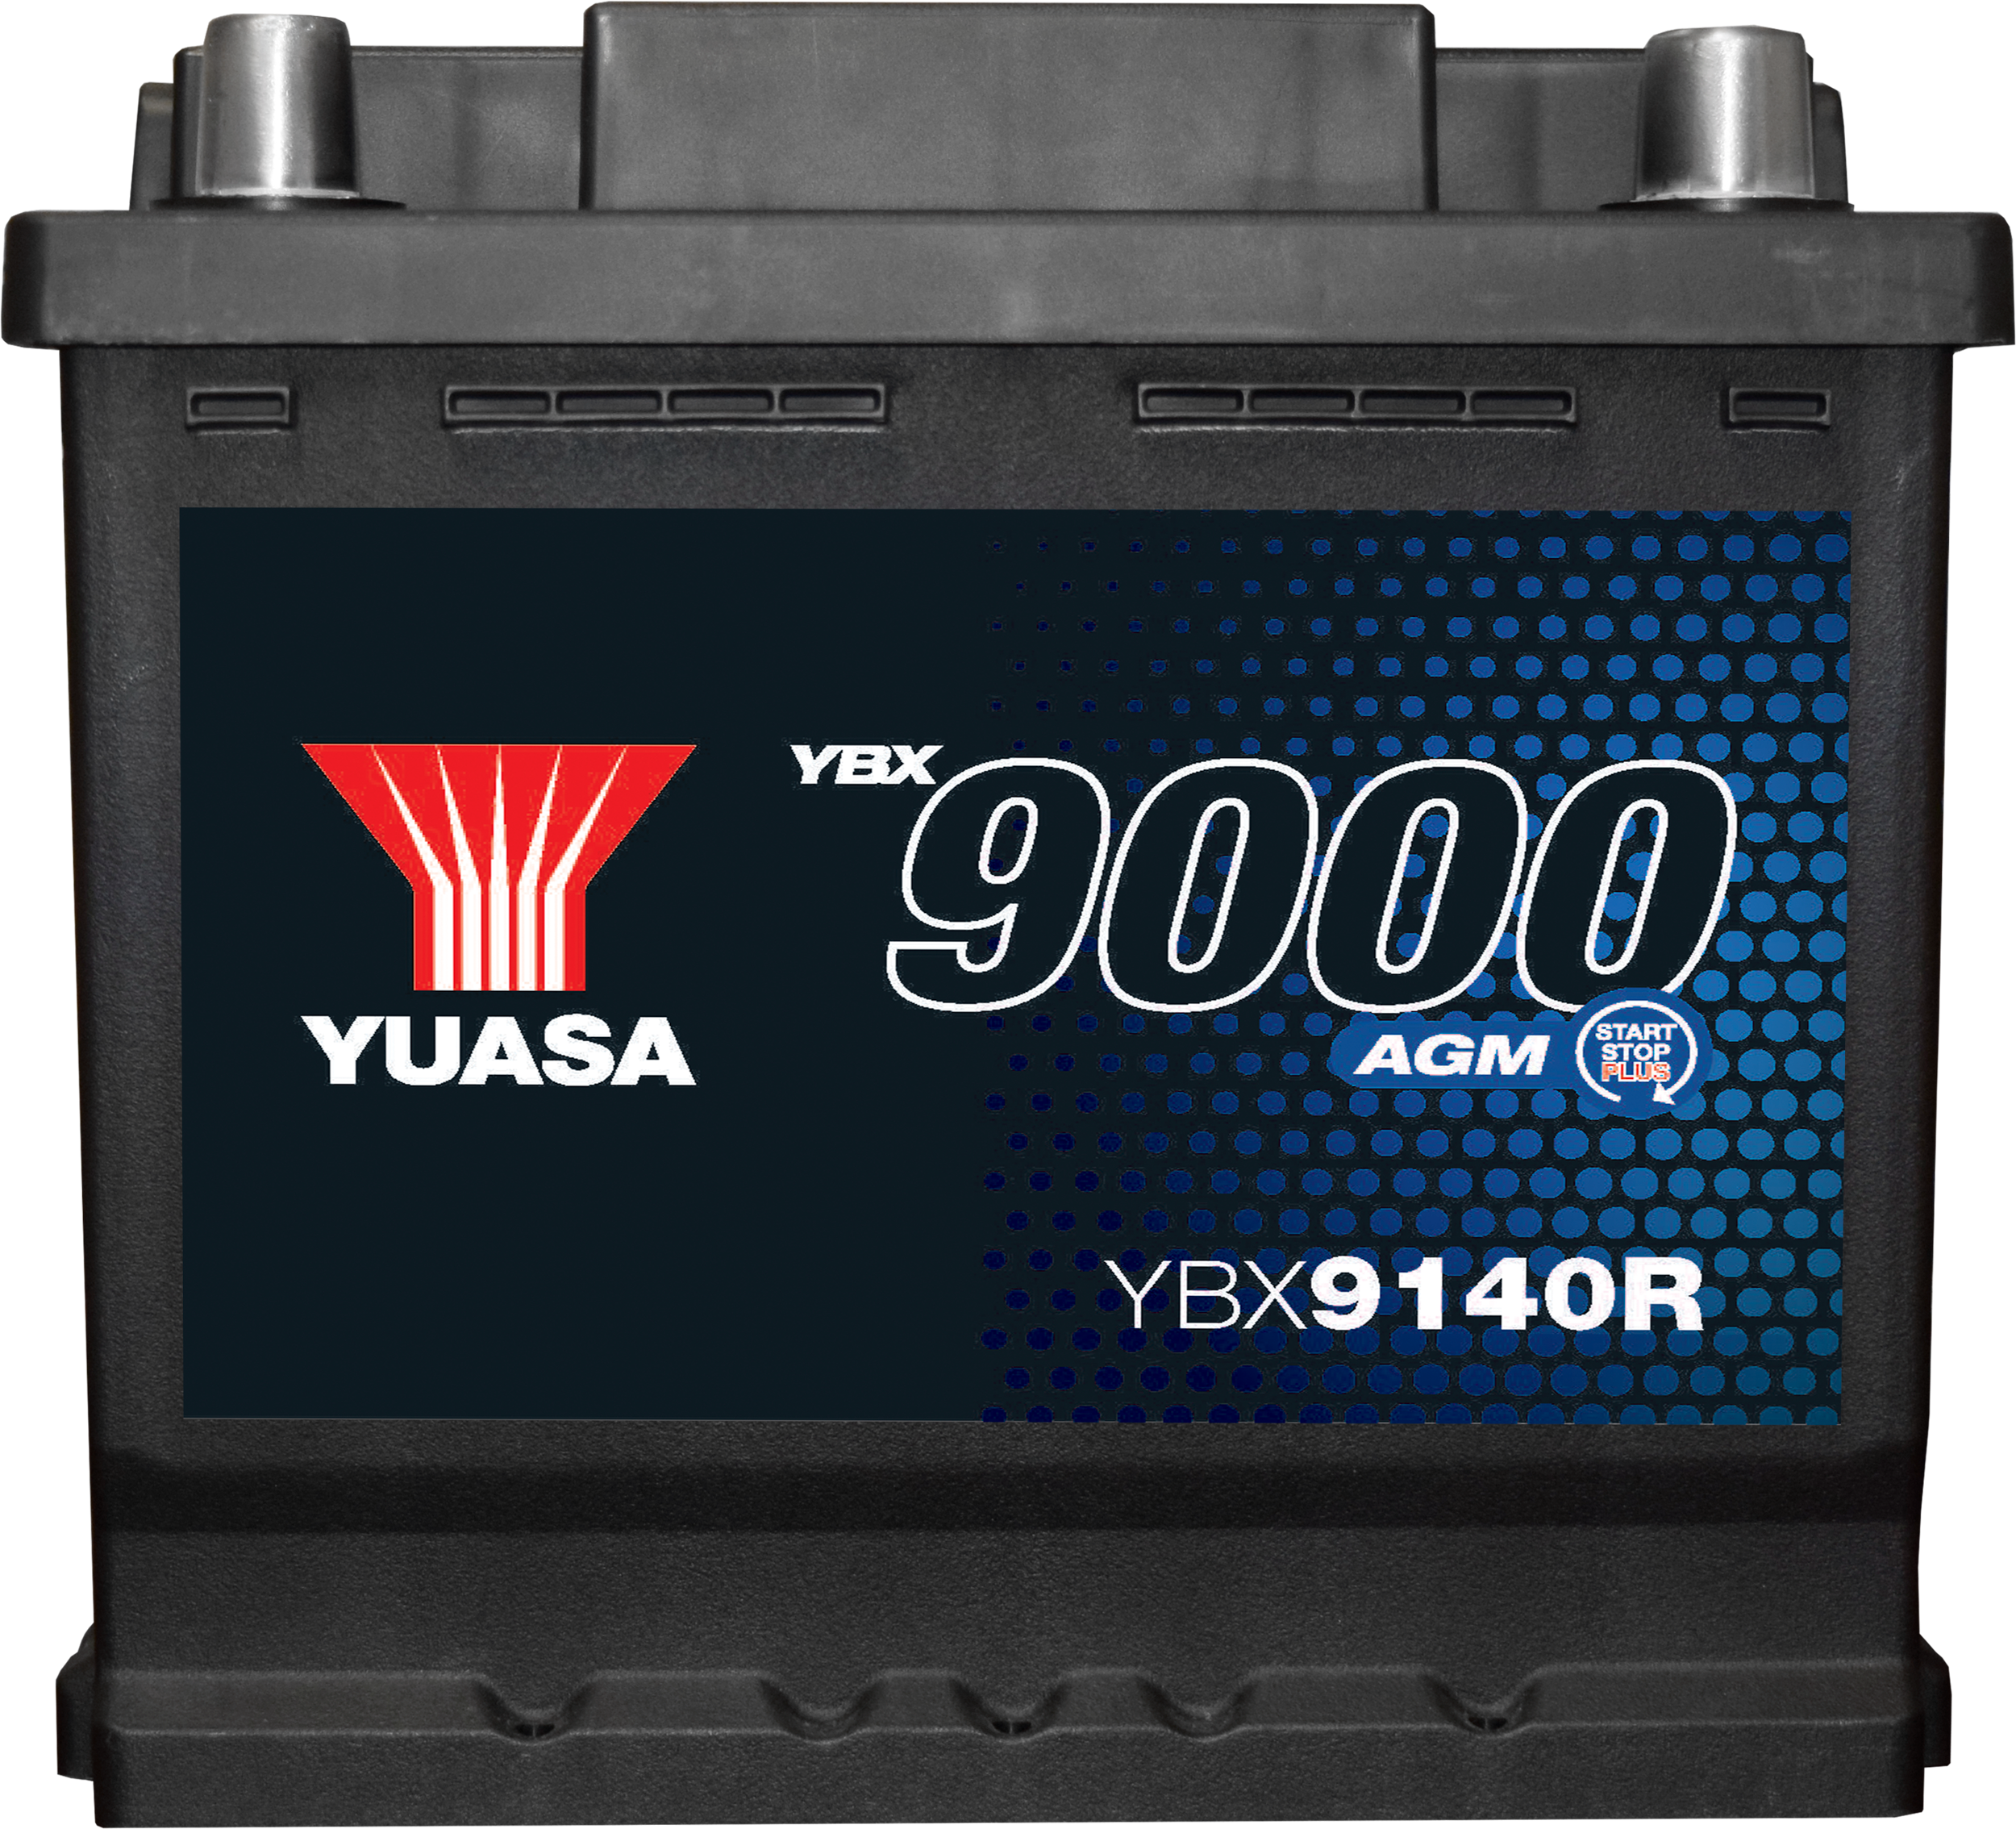 Yuasa - Ybx9140r Agm - Spill-proof - YBXM79L1560MUL